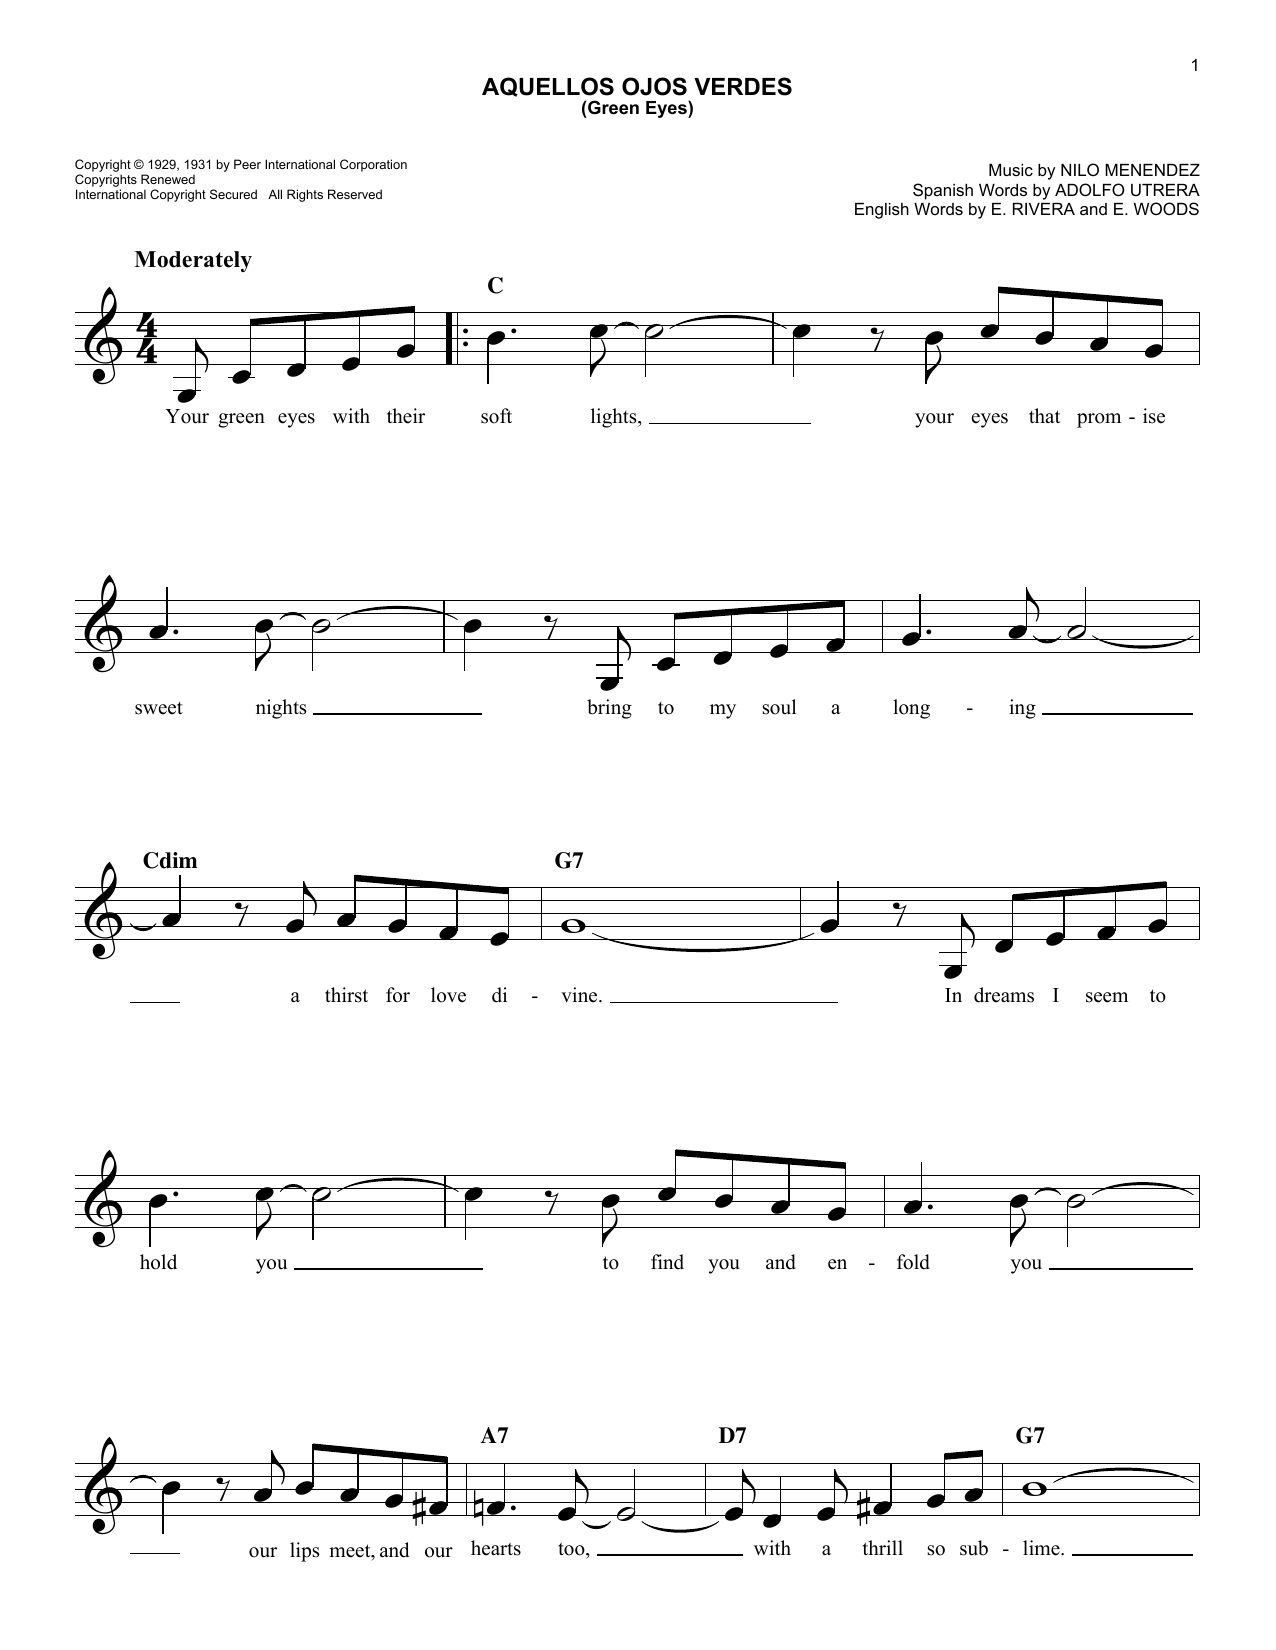 Adolfo Utrera Aquellos Ojos Verdes (Green Eyes) sheet music notes and chords. Download Printable PDF.